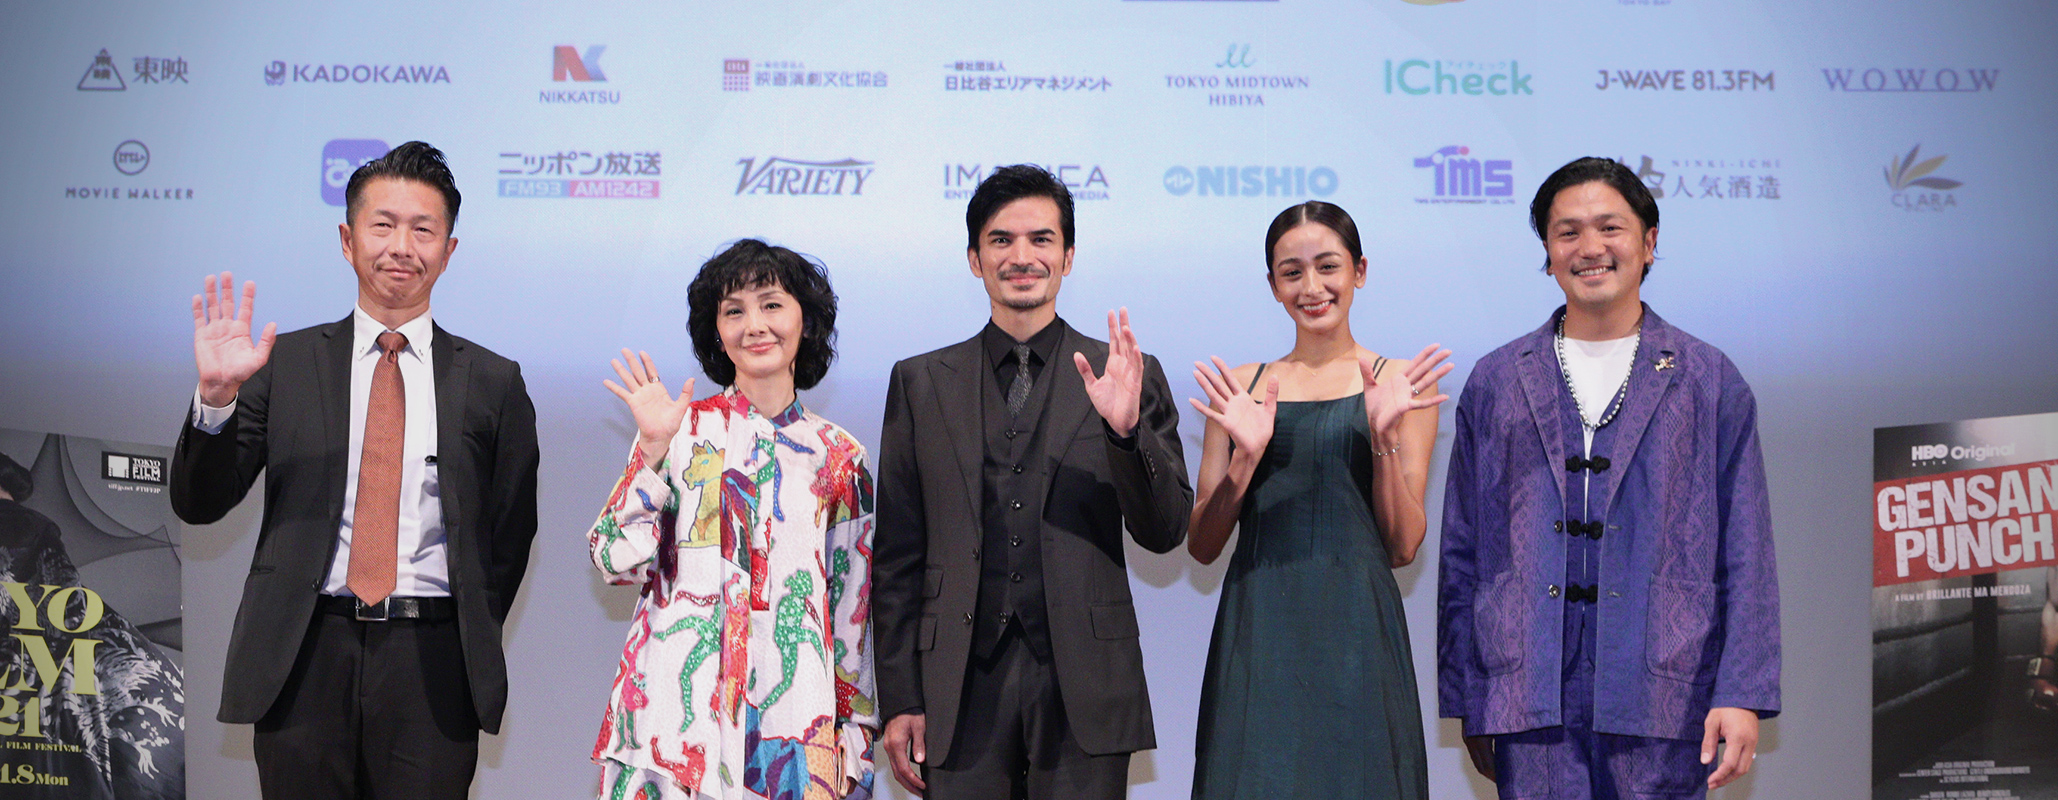 GENSAN PUNCH Q&A Shogen (Actor), Minami Kaho (Actress), Kisanuki Maya (Actress), Tsuchiyama Naozumi (Former boxer - on whom the film is based), Yamashita Takahiro (Producer)